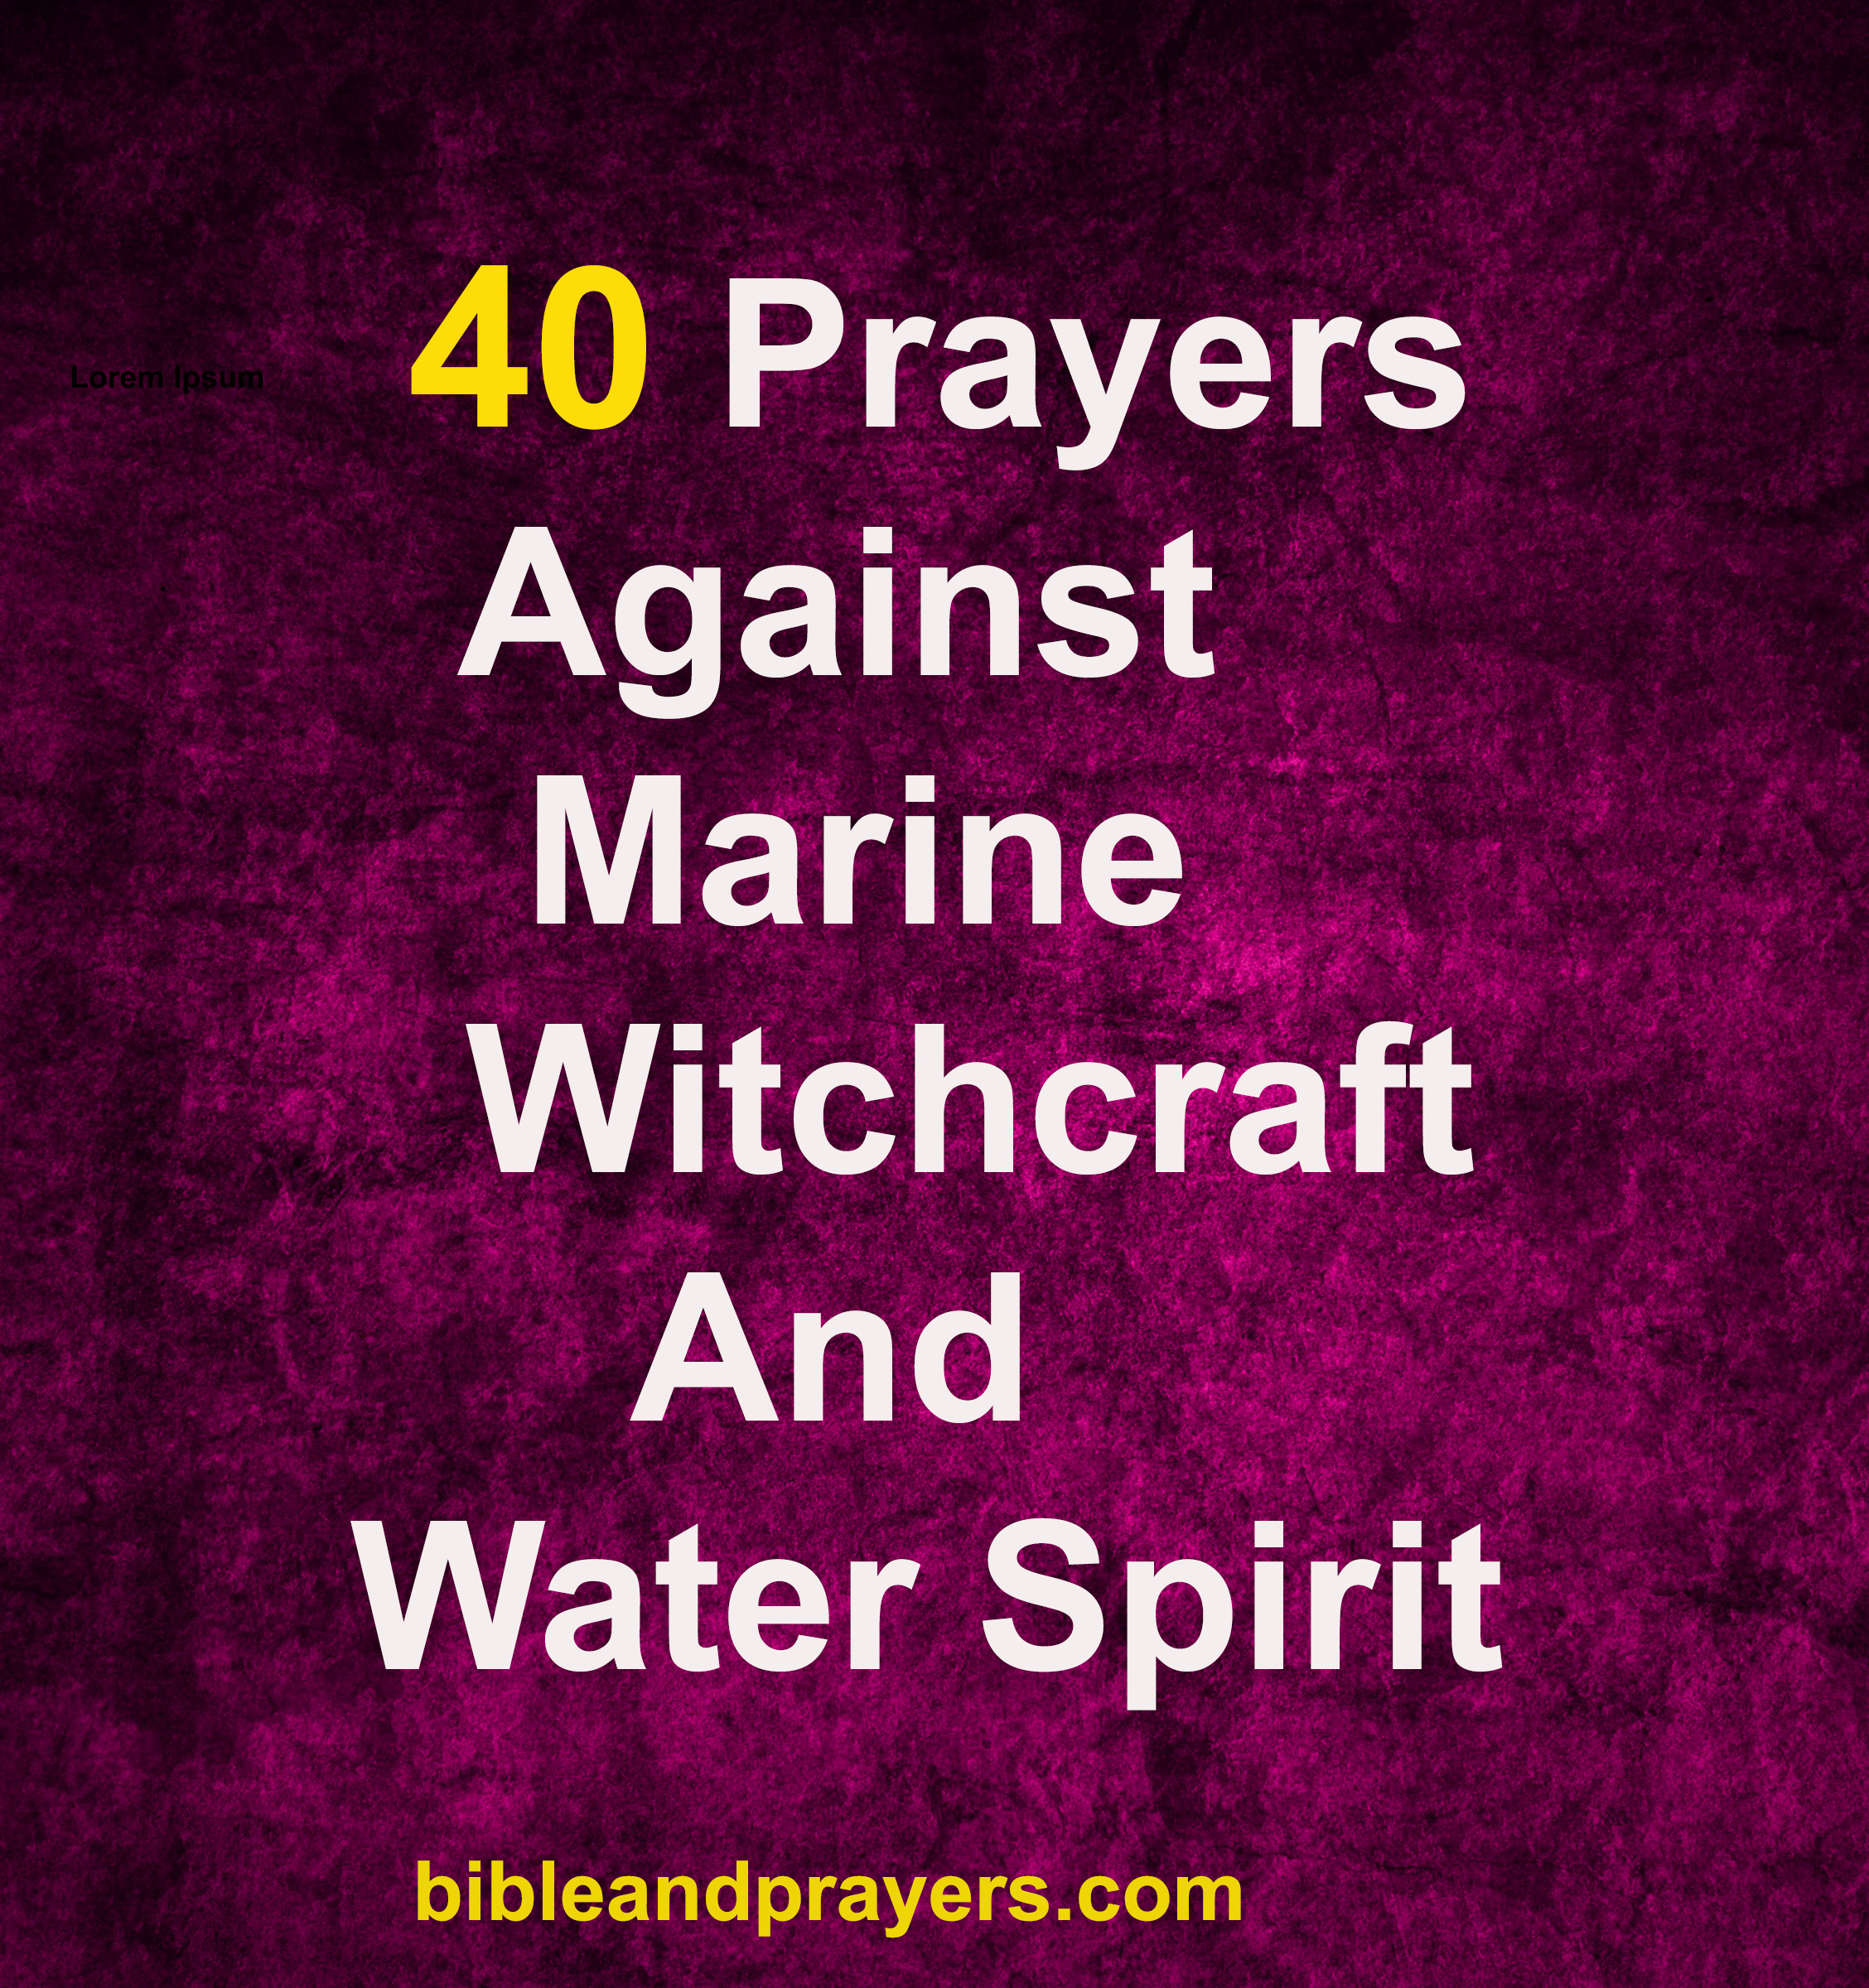 40 Prayers Against Marine Witchcraft And Water Spirit